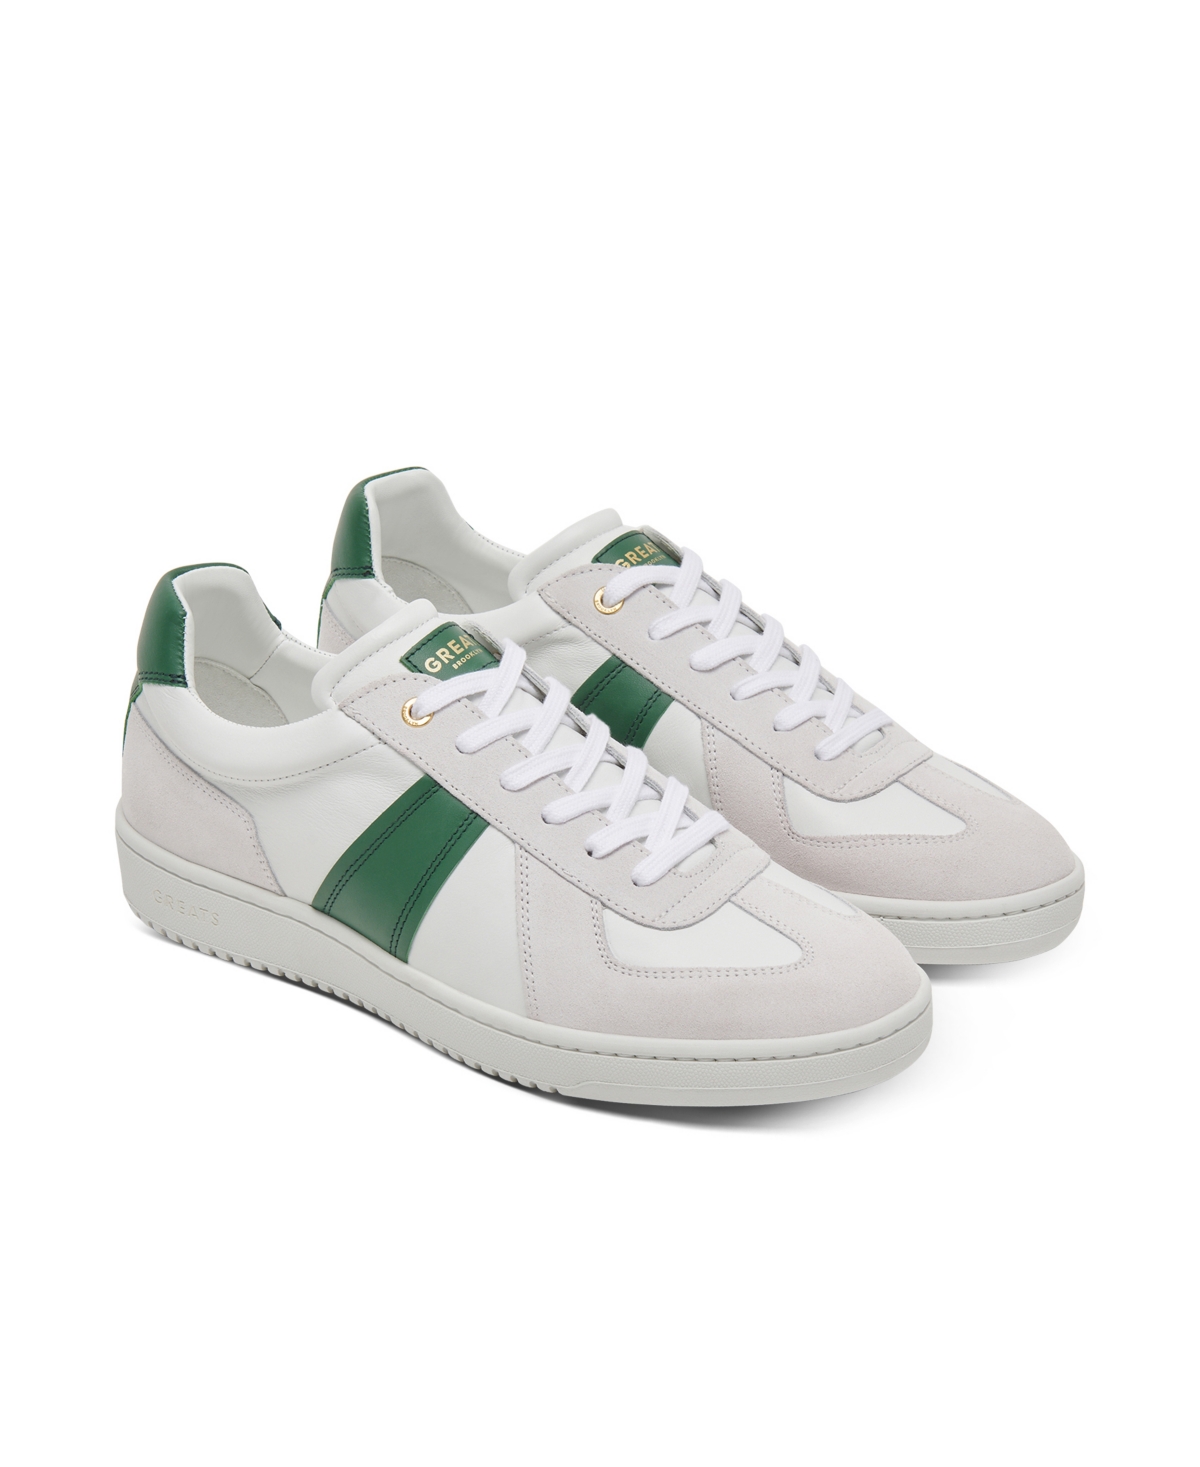 Men's Gat Low Sneakers - Blanco/green